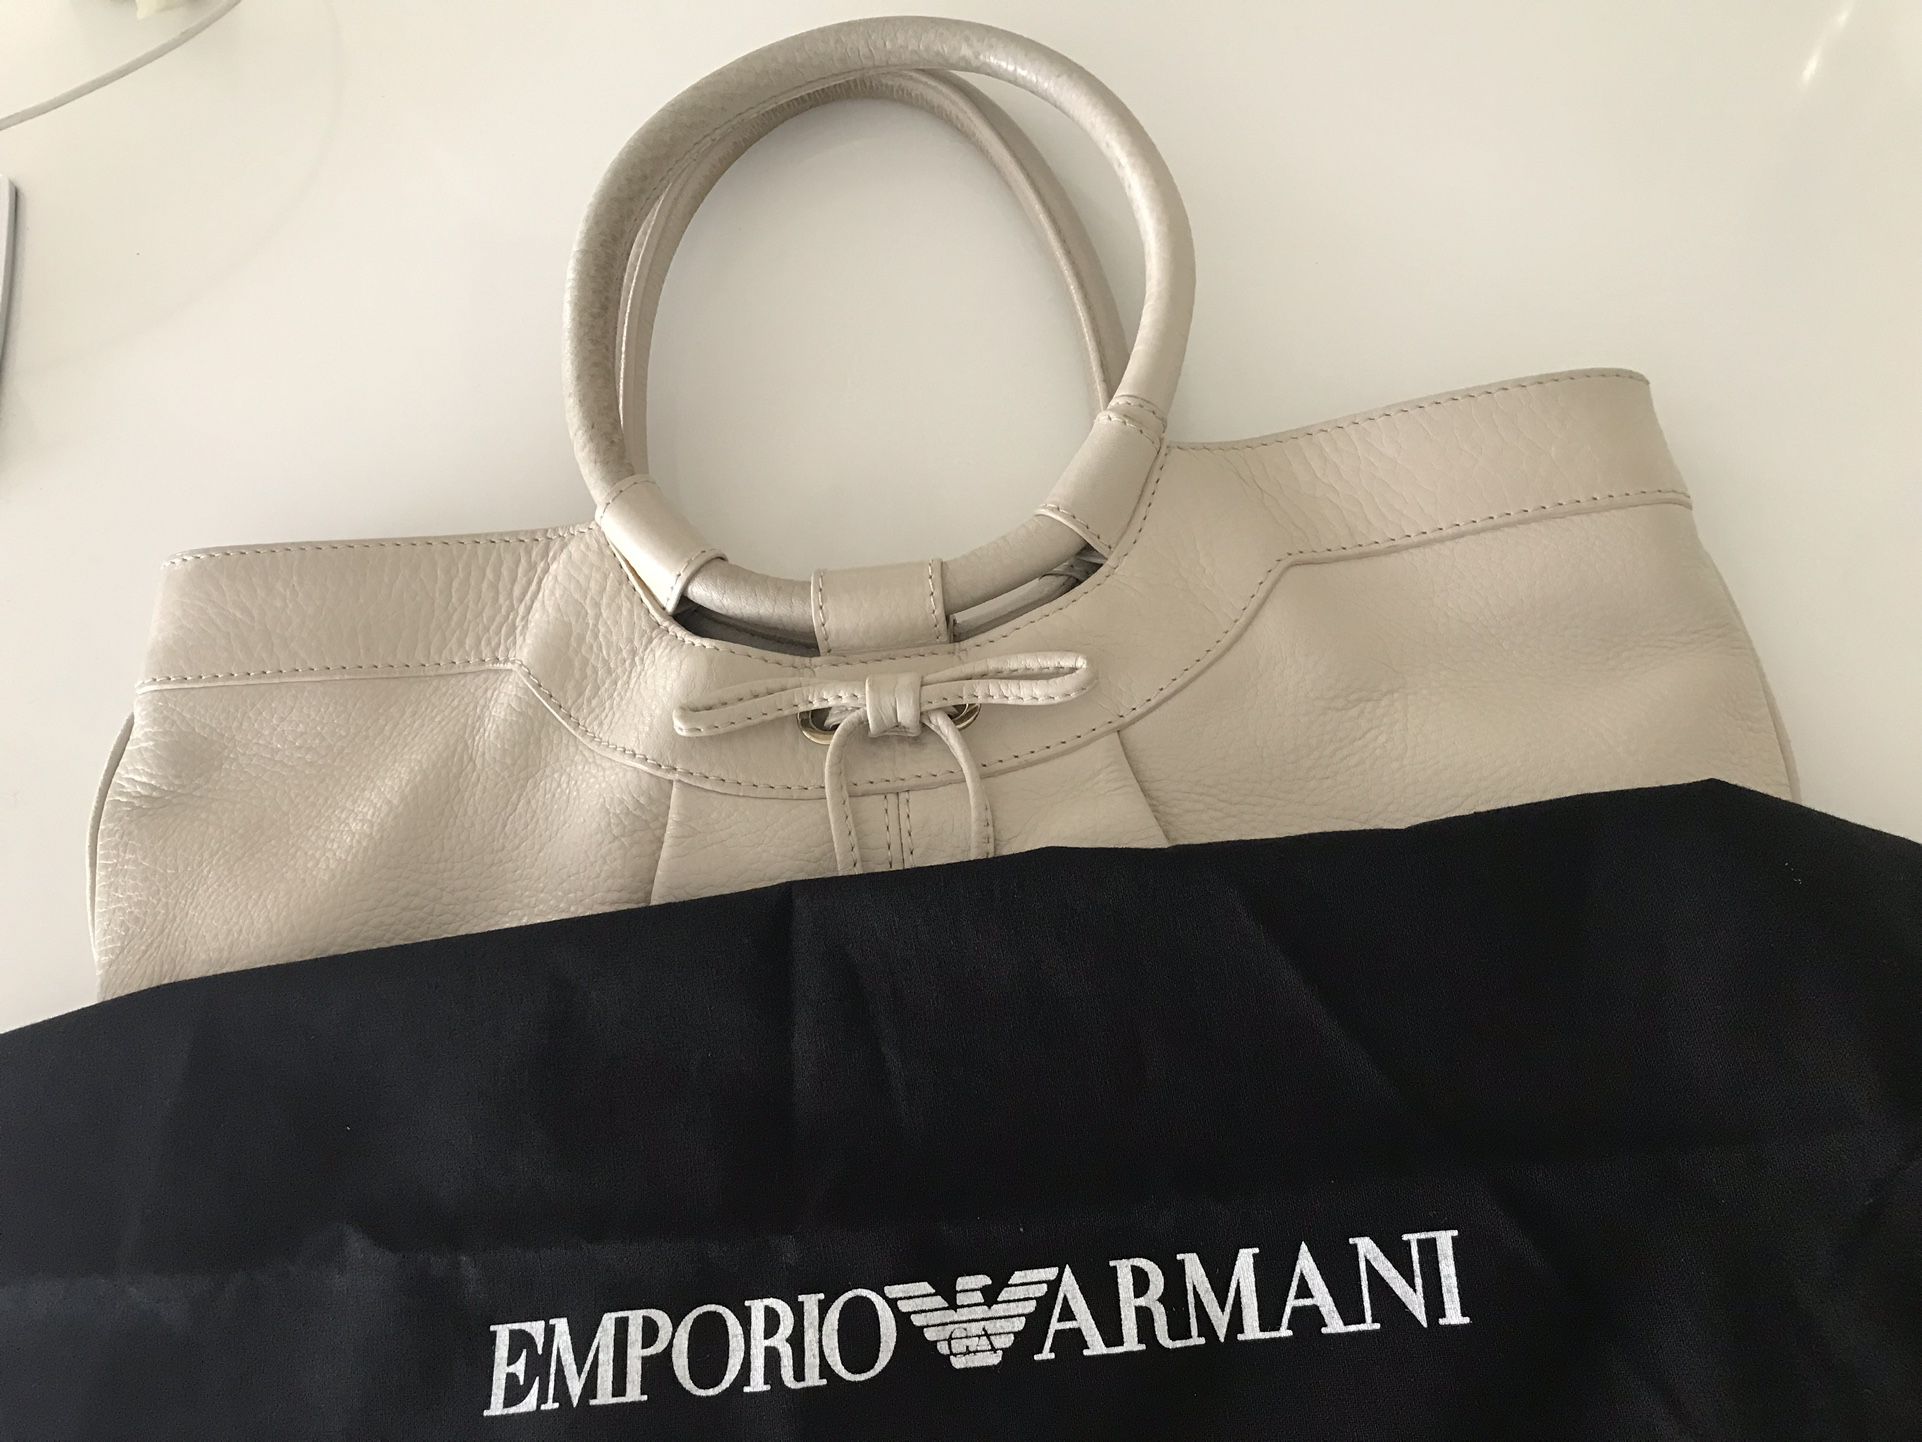 Used Emporio Armani Bag - $280 OBO